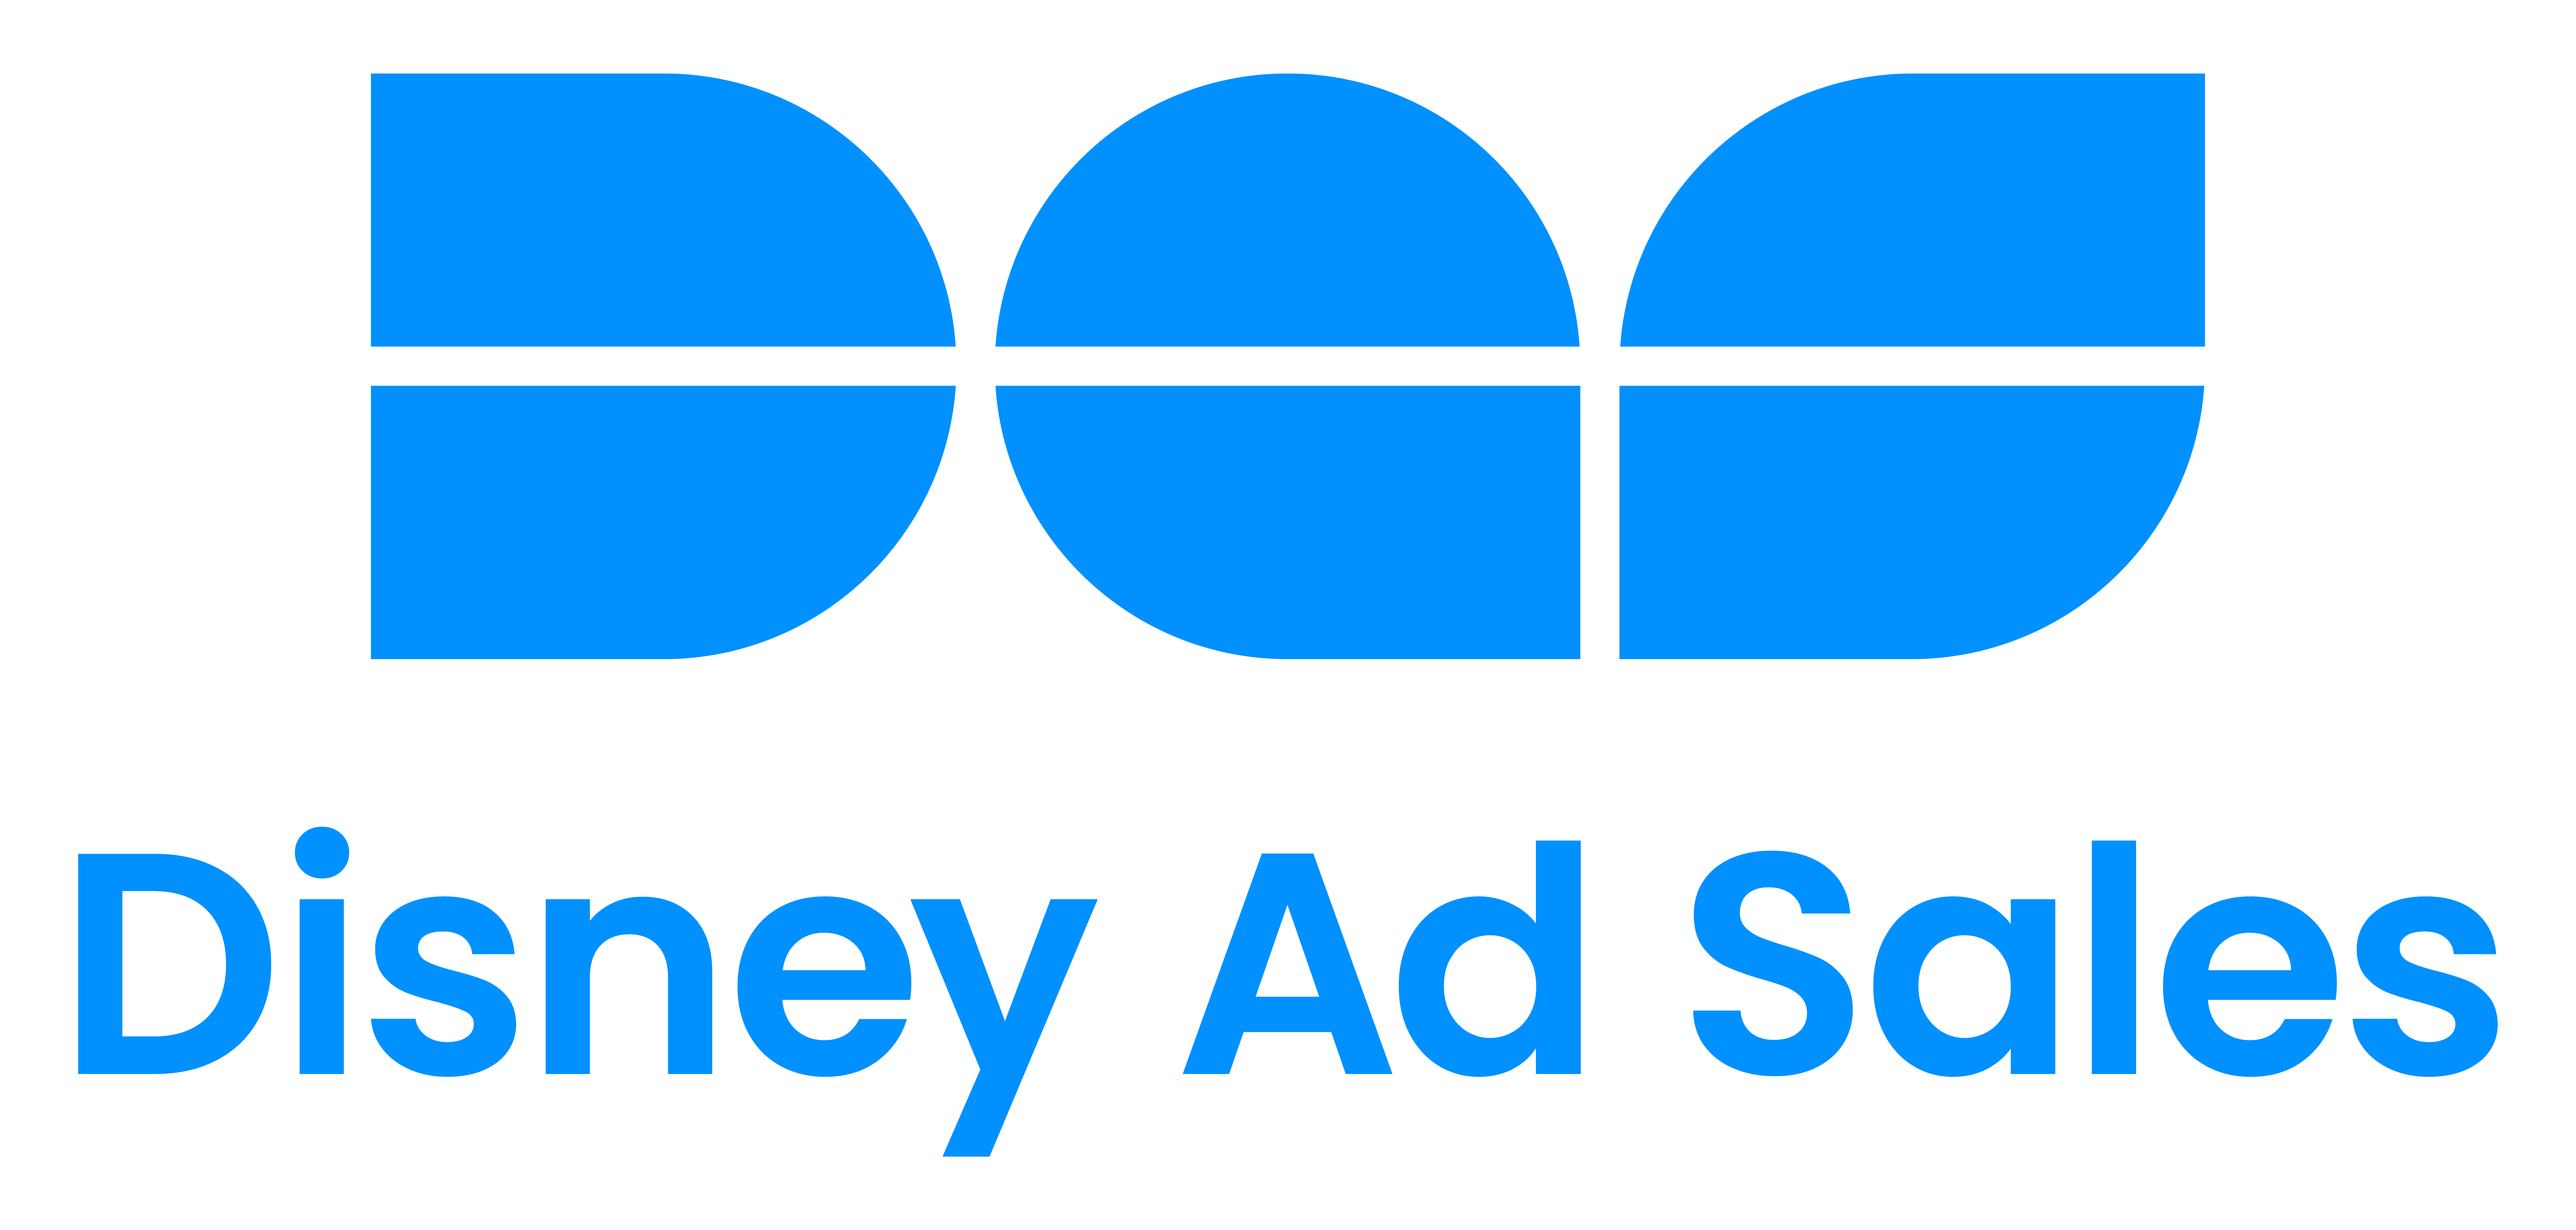 Disney Ad Sales